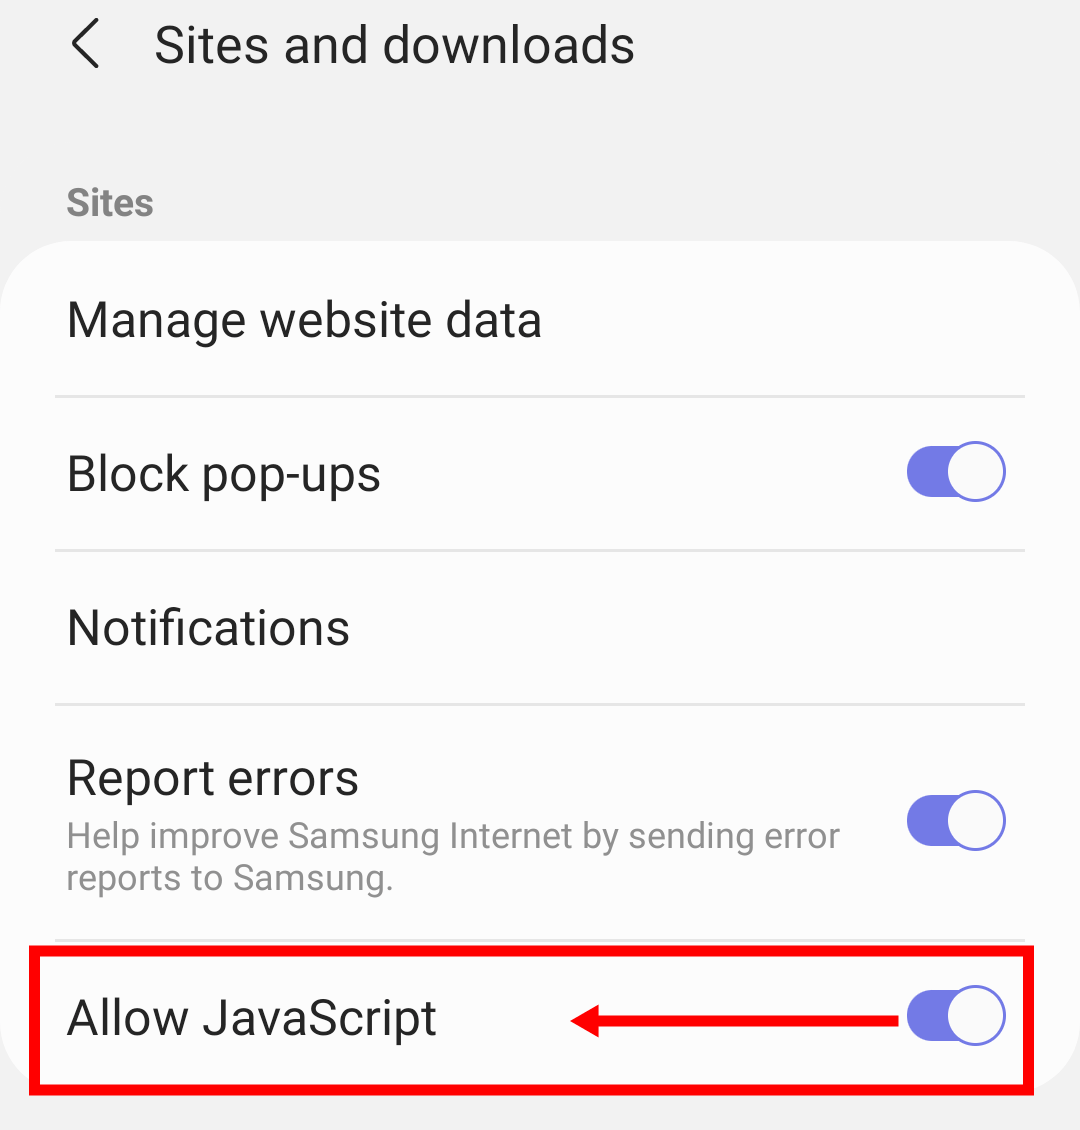 Allow JavaScript execution on Samsung Internet